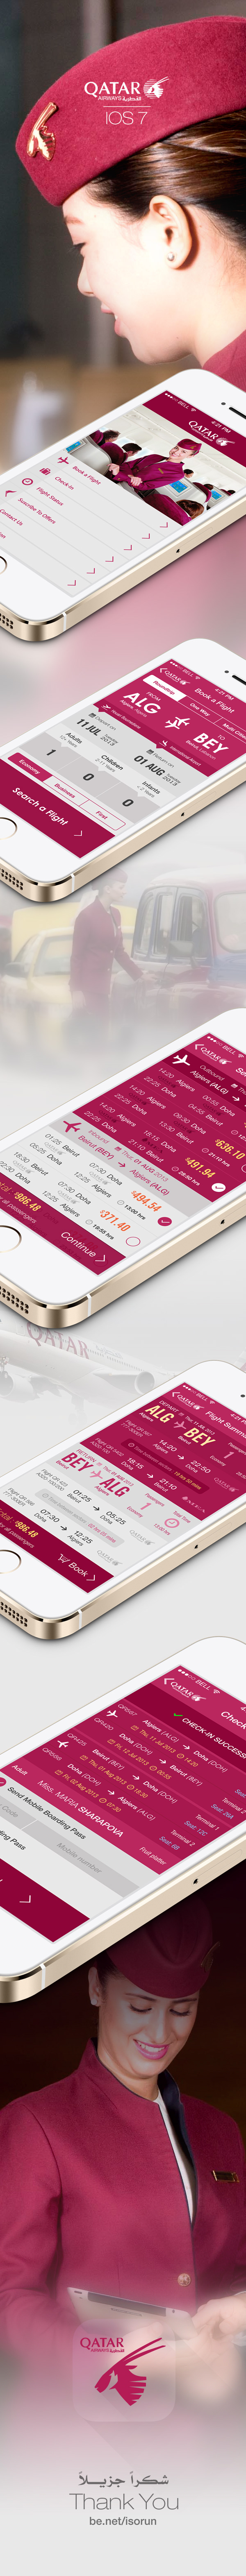 flight application iphone mobile iOS 7 ios7 Qatar Airways fly company UI flat flight search Interface search Booking BrooklynCreates